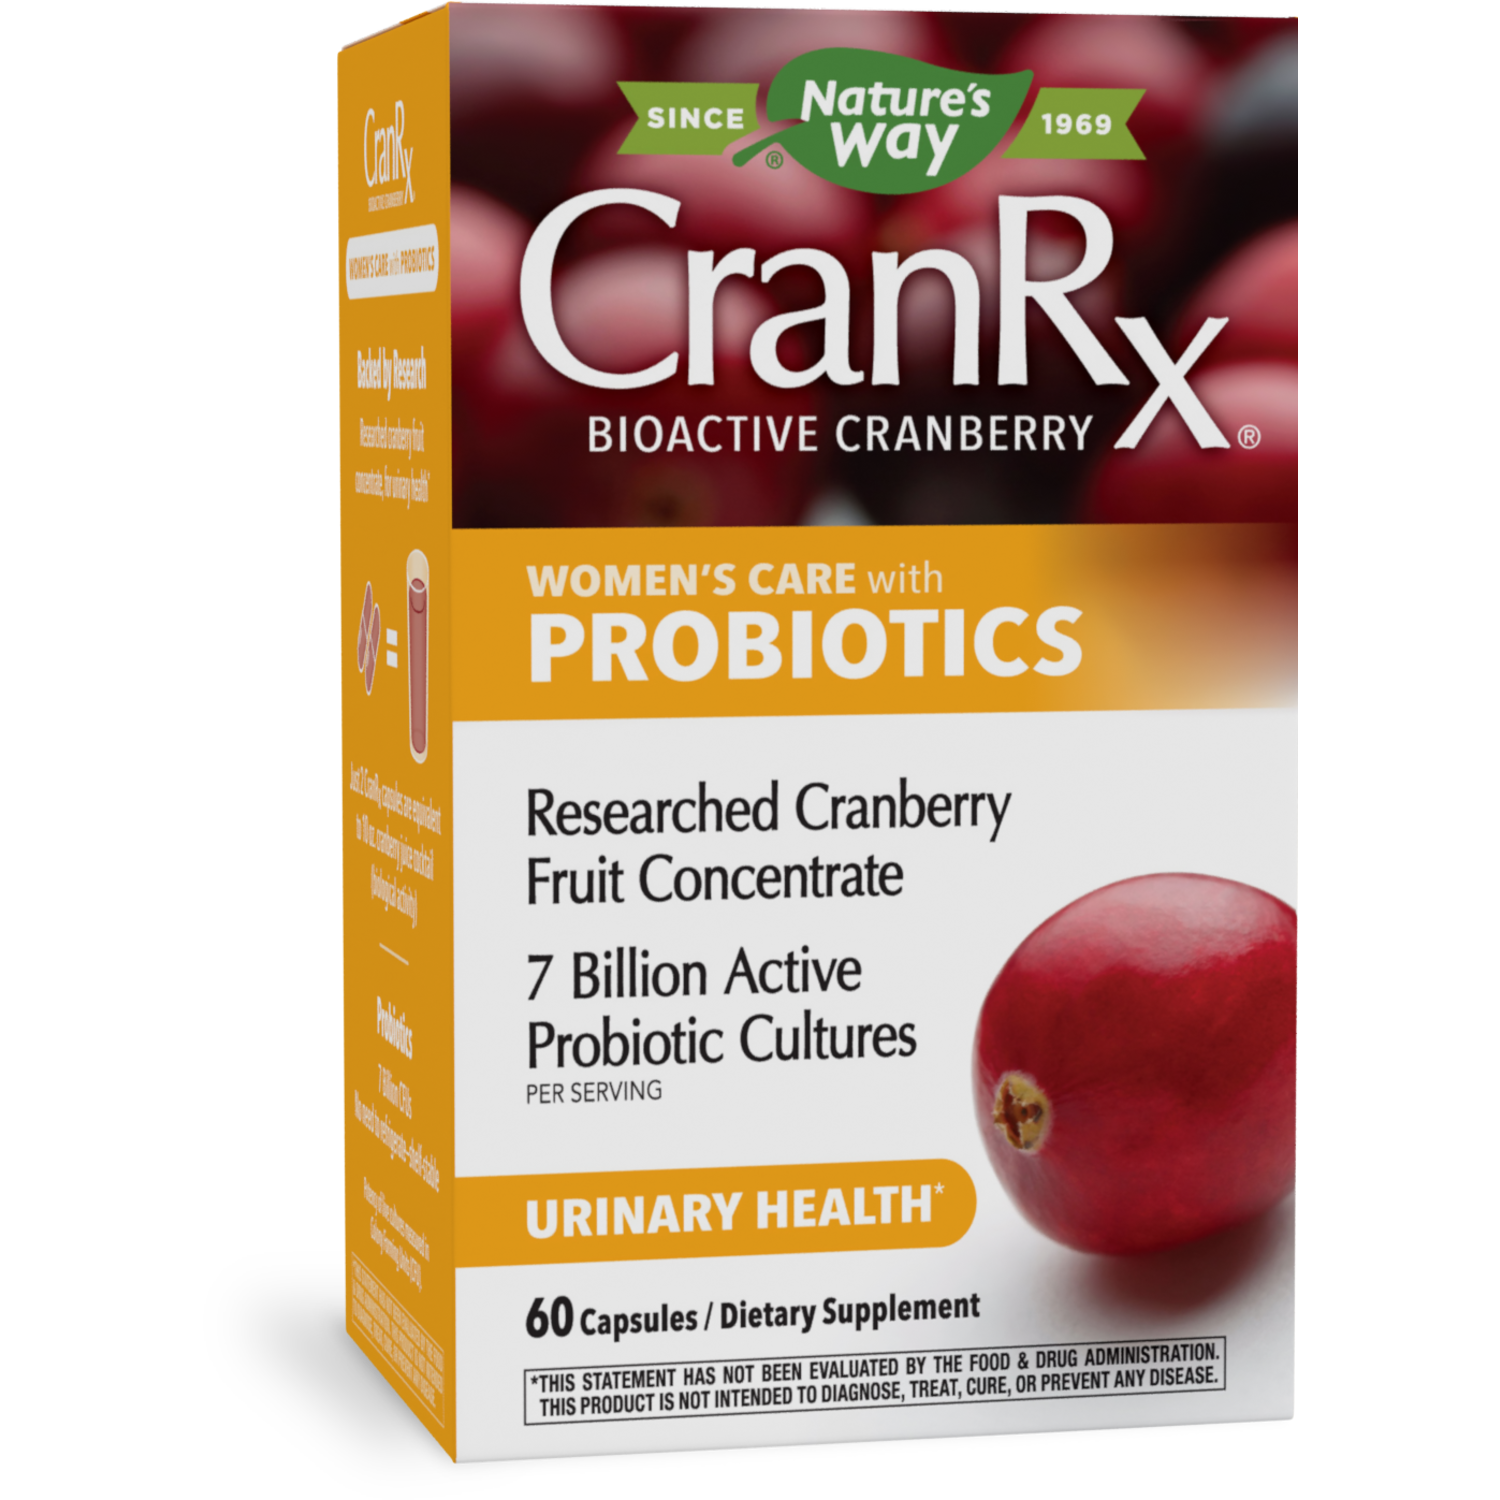 Nature’s Way CranRx® Women’s Care with Probiotics, 7 Billion Active Probiotic Cultures, Urinary Health*, 60 Capsules - image 1 of 7